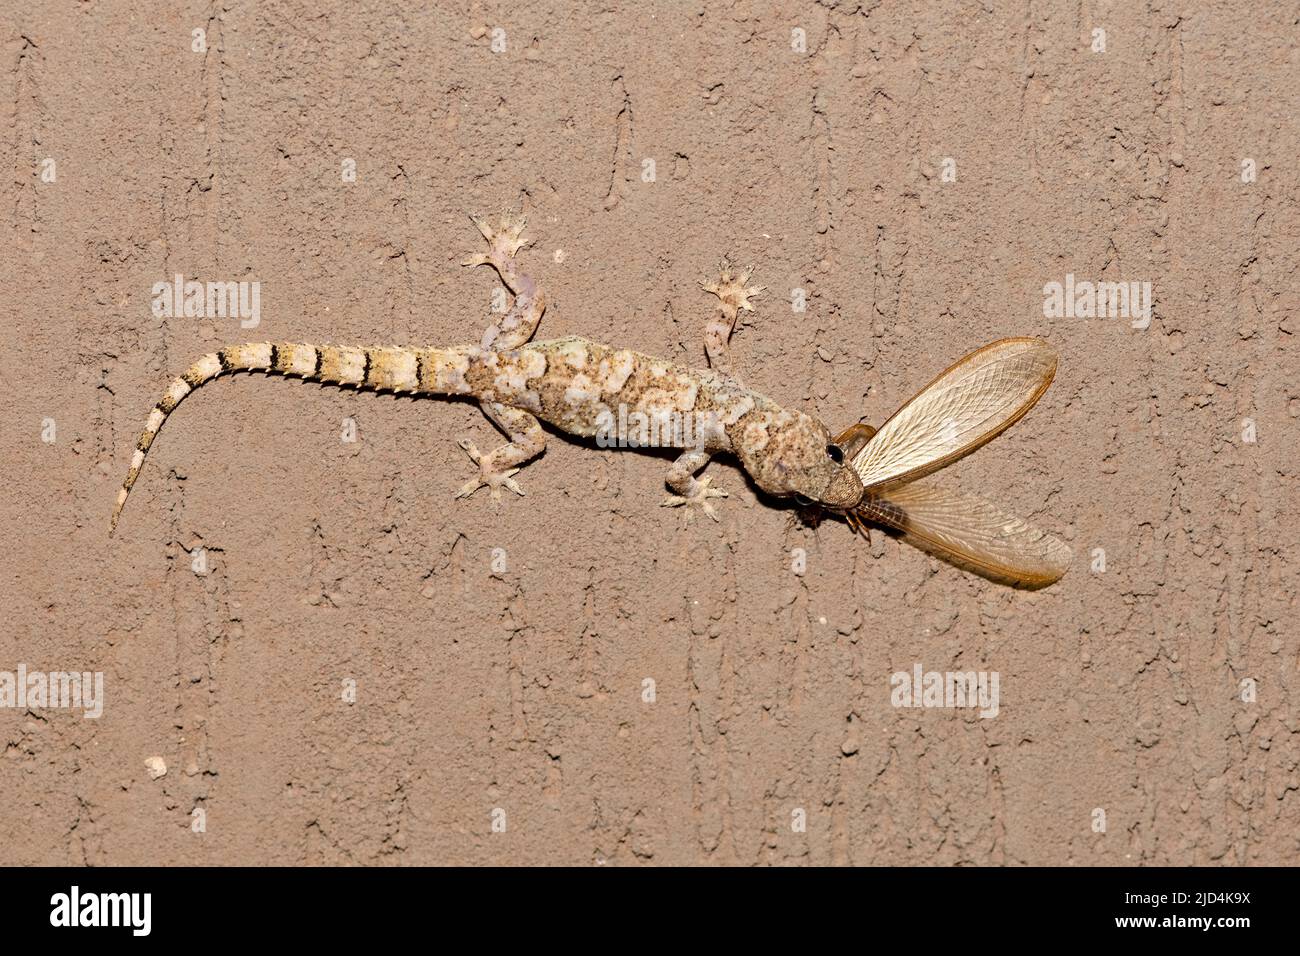 Tropischer Hausgecko (Hemidactylus mabouia), der in Zimanga, Südafrika, Insekten ernährt. Stockfoto